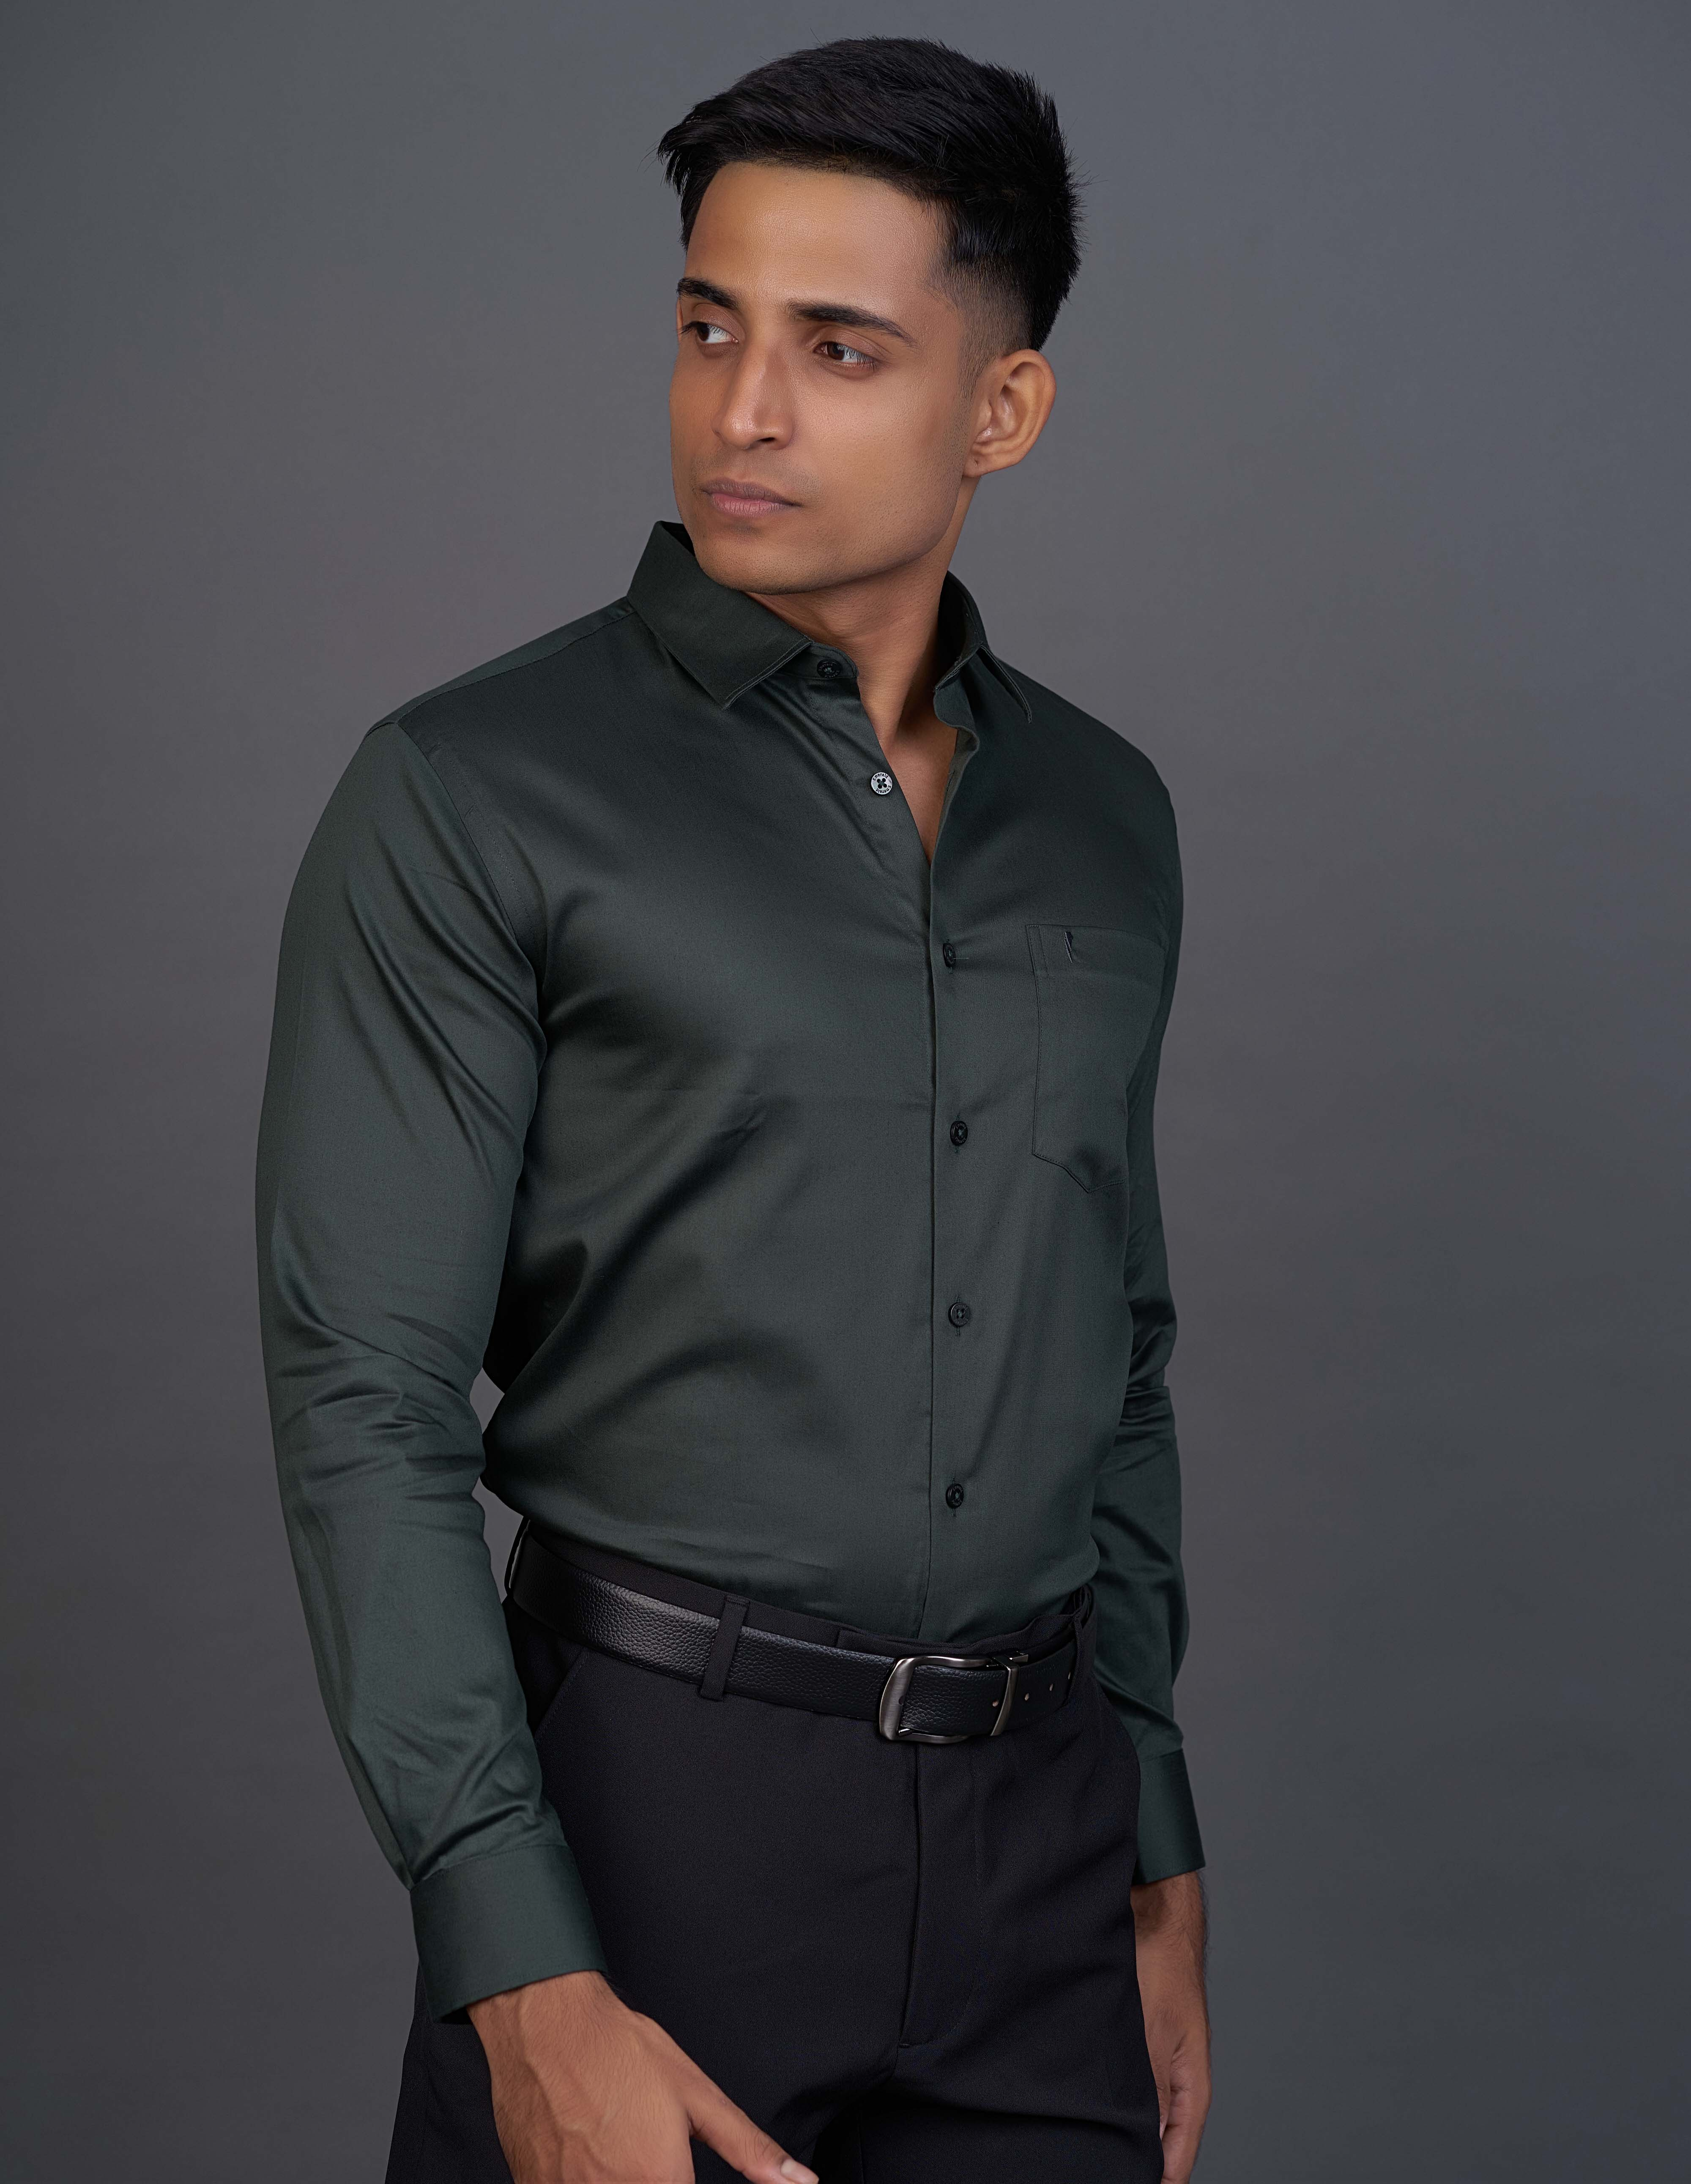 Emerald Fashion Plain Slim Fit-Green Dark